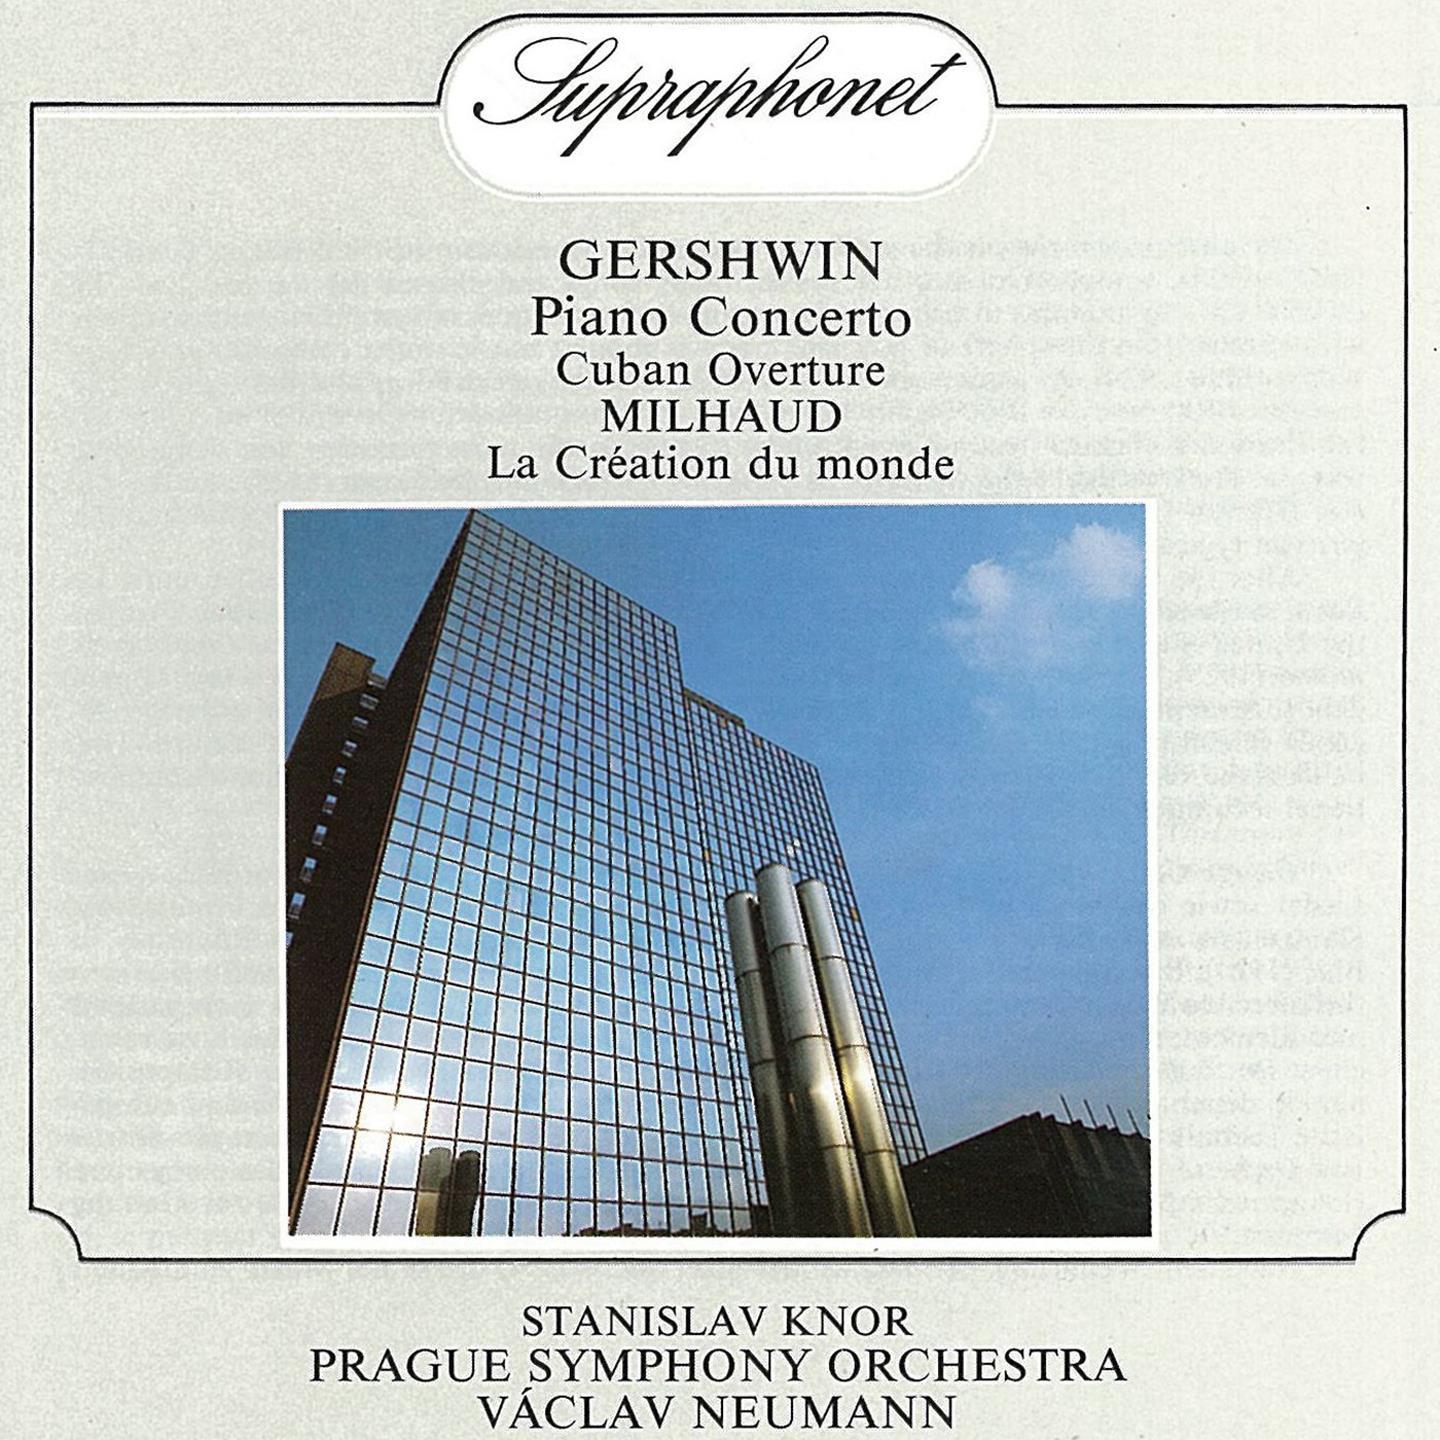 Gershwin: Piano Concerto, Cuban Overture  Milhaud: La Cre ation du monde